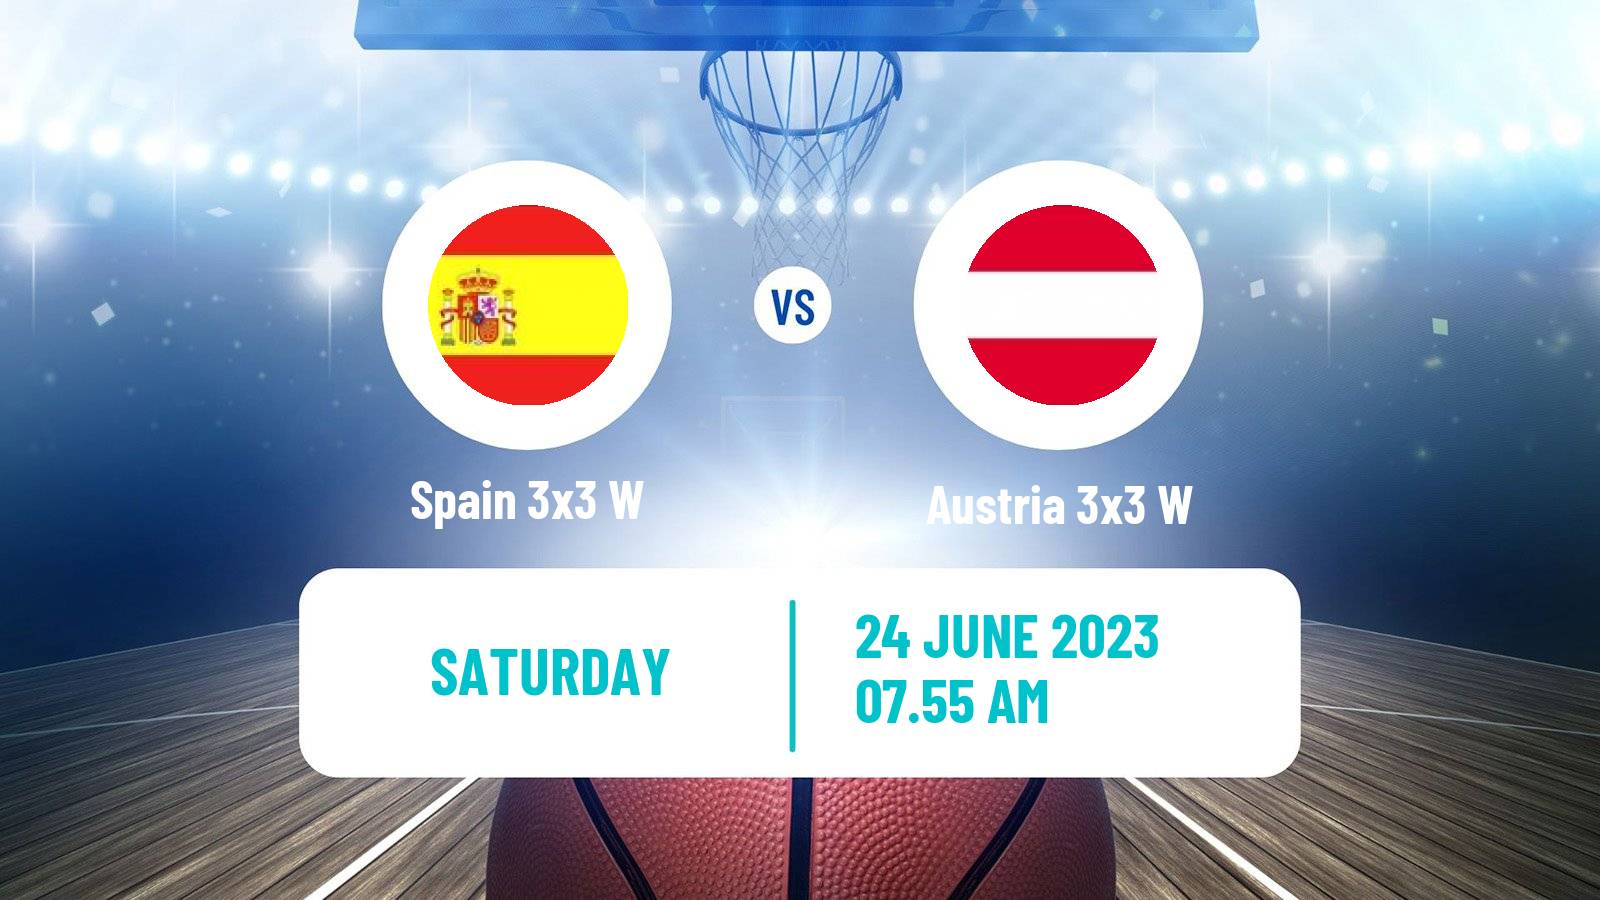 Basketball European Games 3x3 Women Spain 3x3 W - Austria 3x3 W